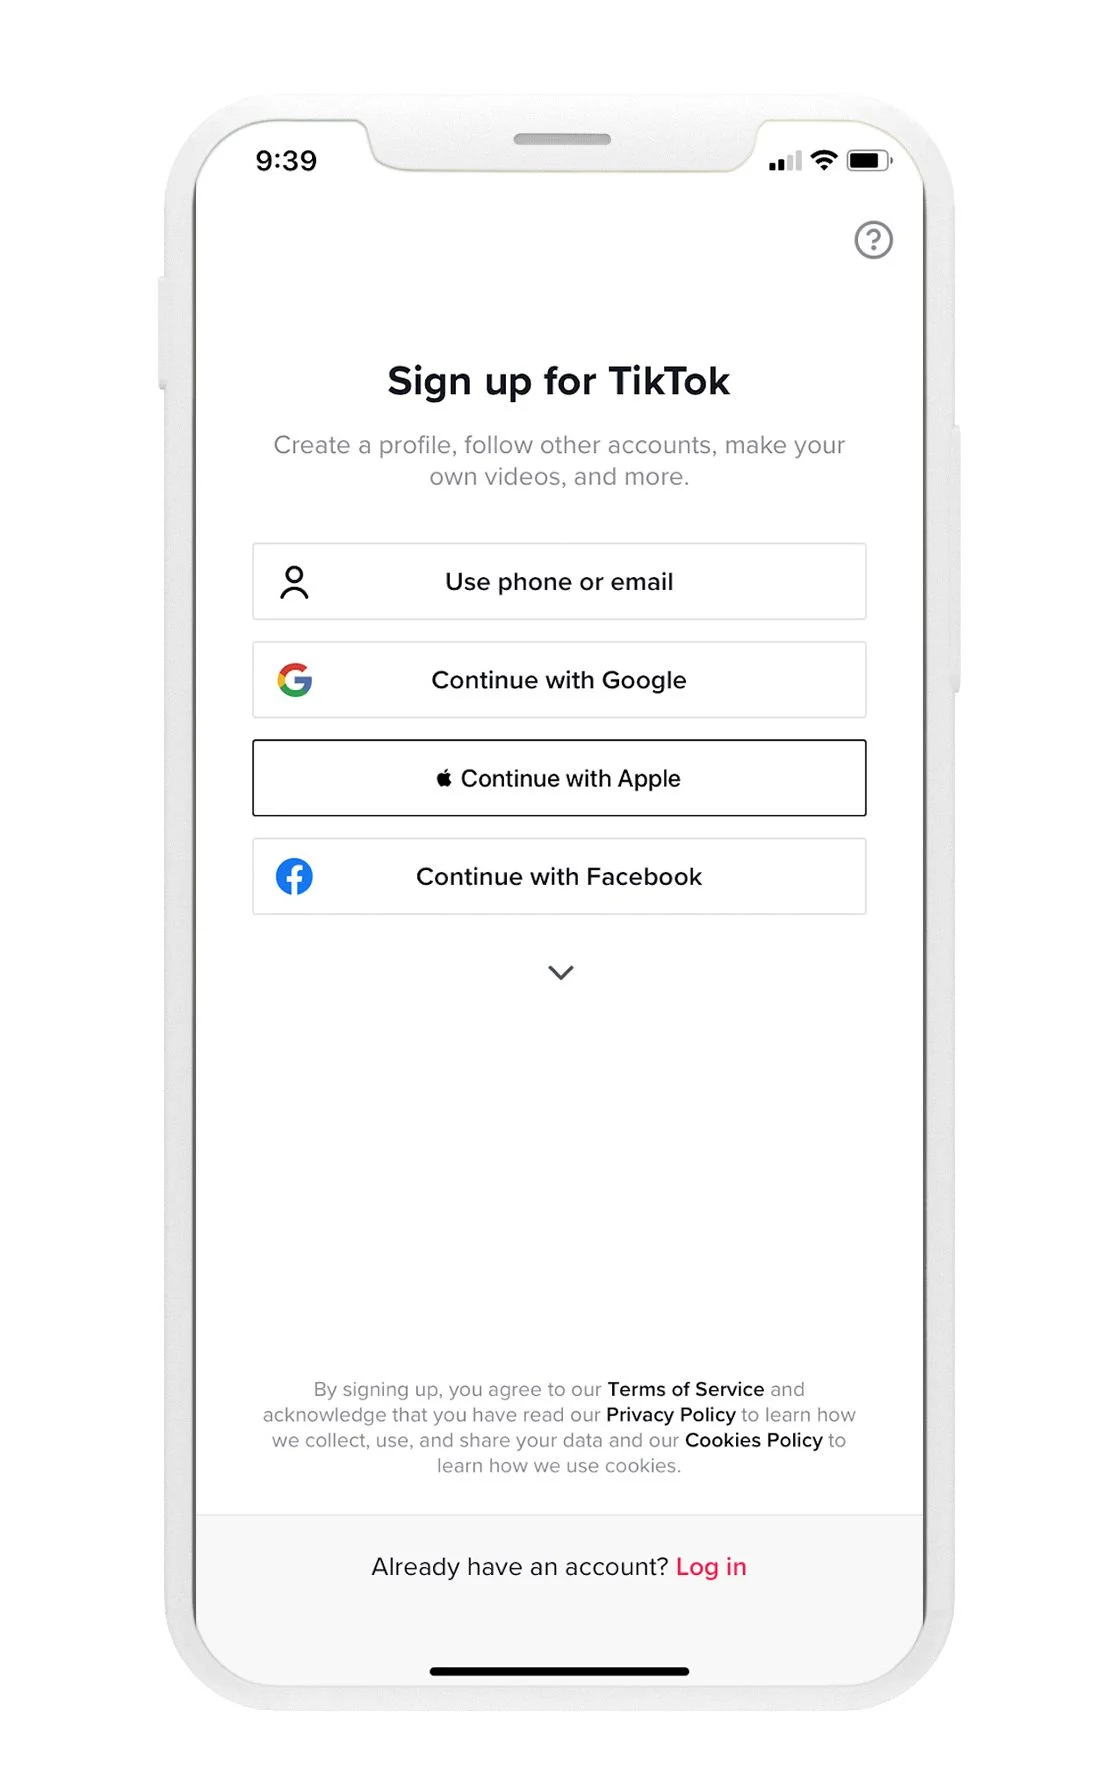 Apple now has an official verified TikTok account